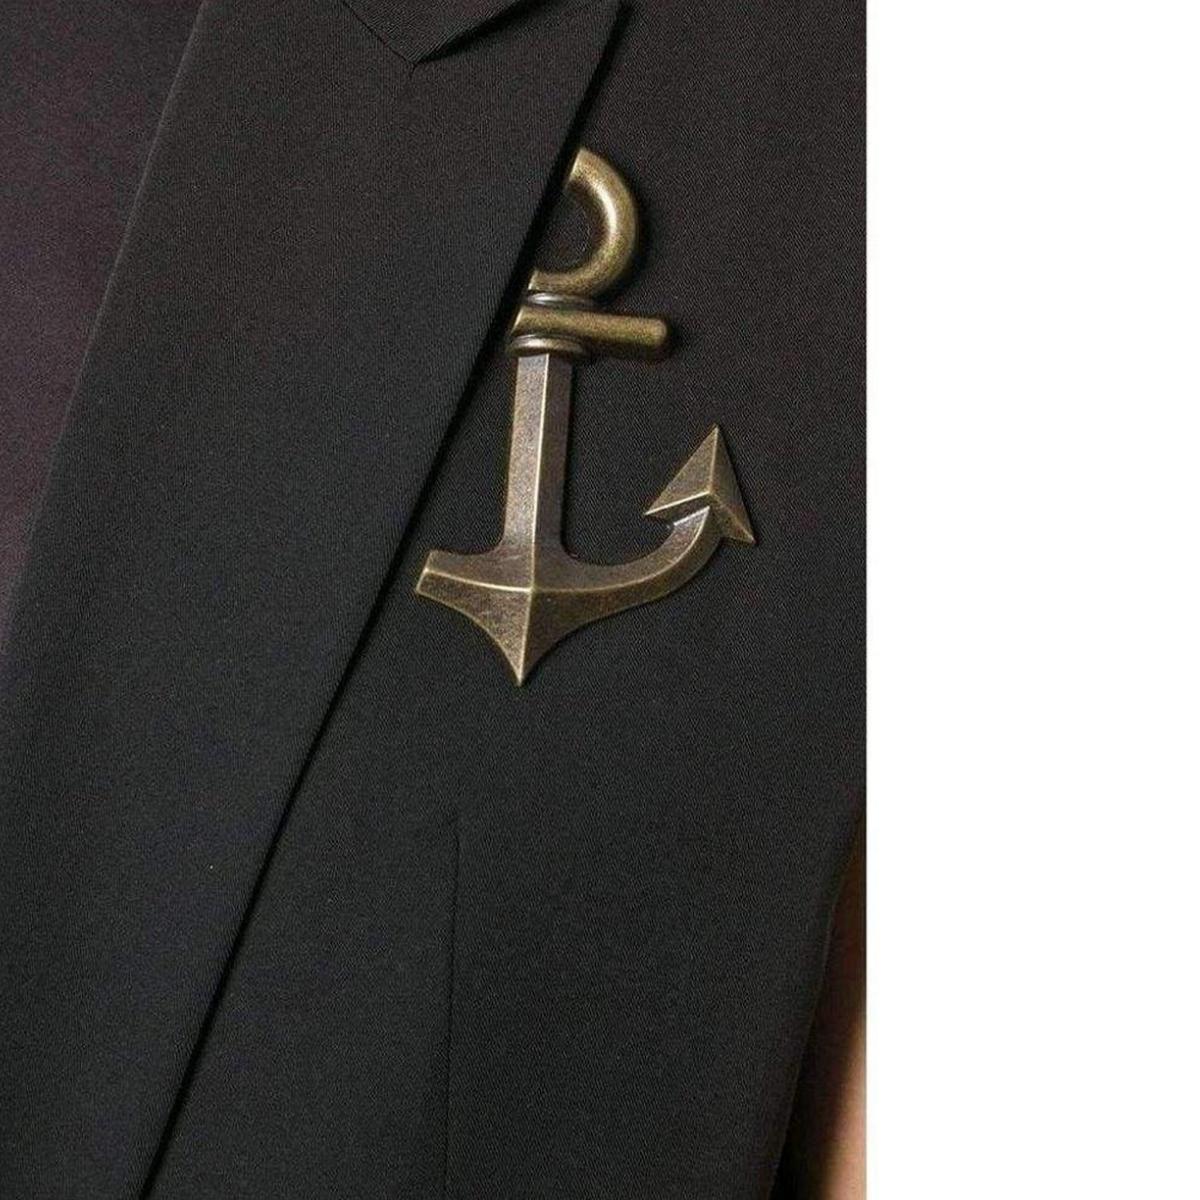 Pinned Anchor Emblem Vest